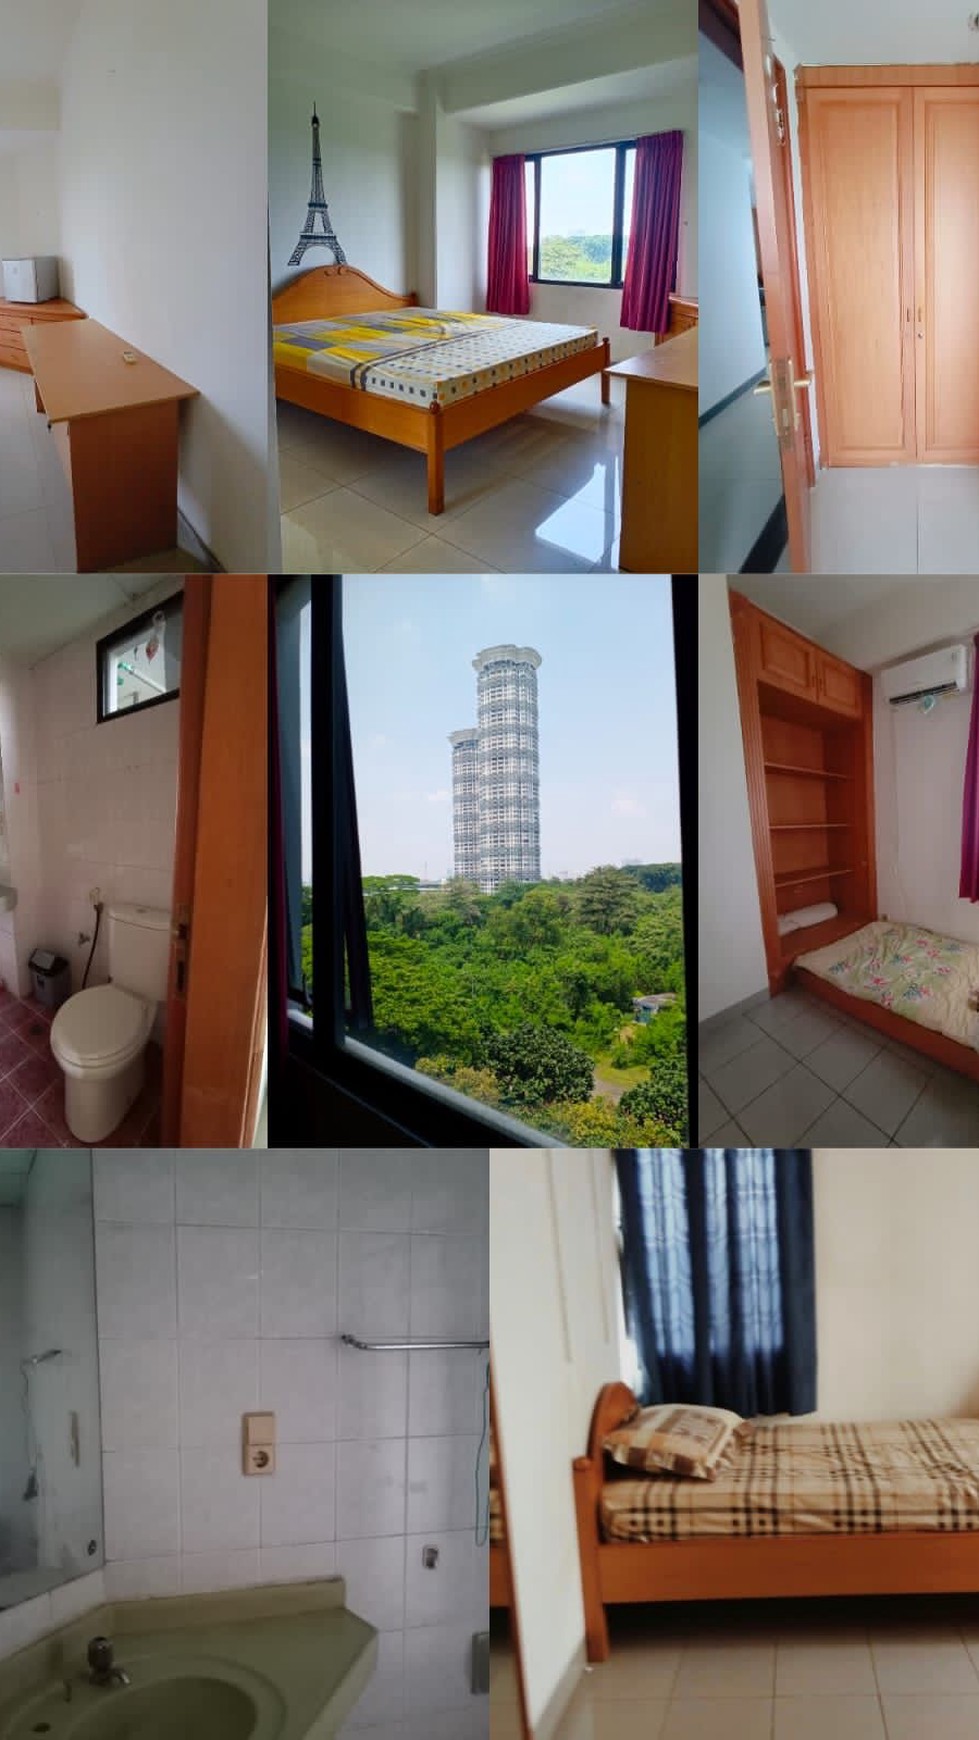 Dijual murah Apartemen Kondominium Lippo Karawaci Tangerang Tower Fairway